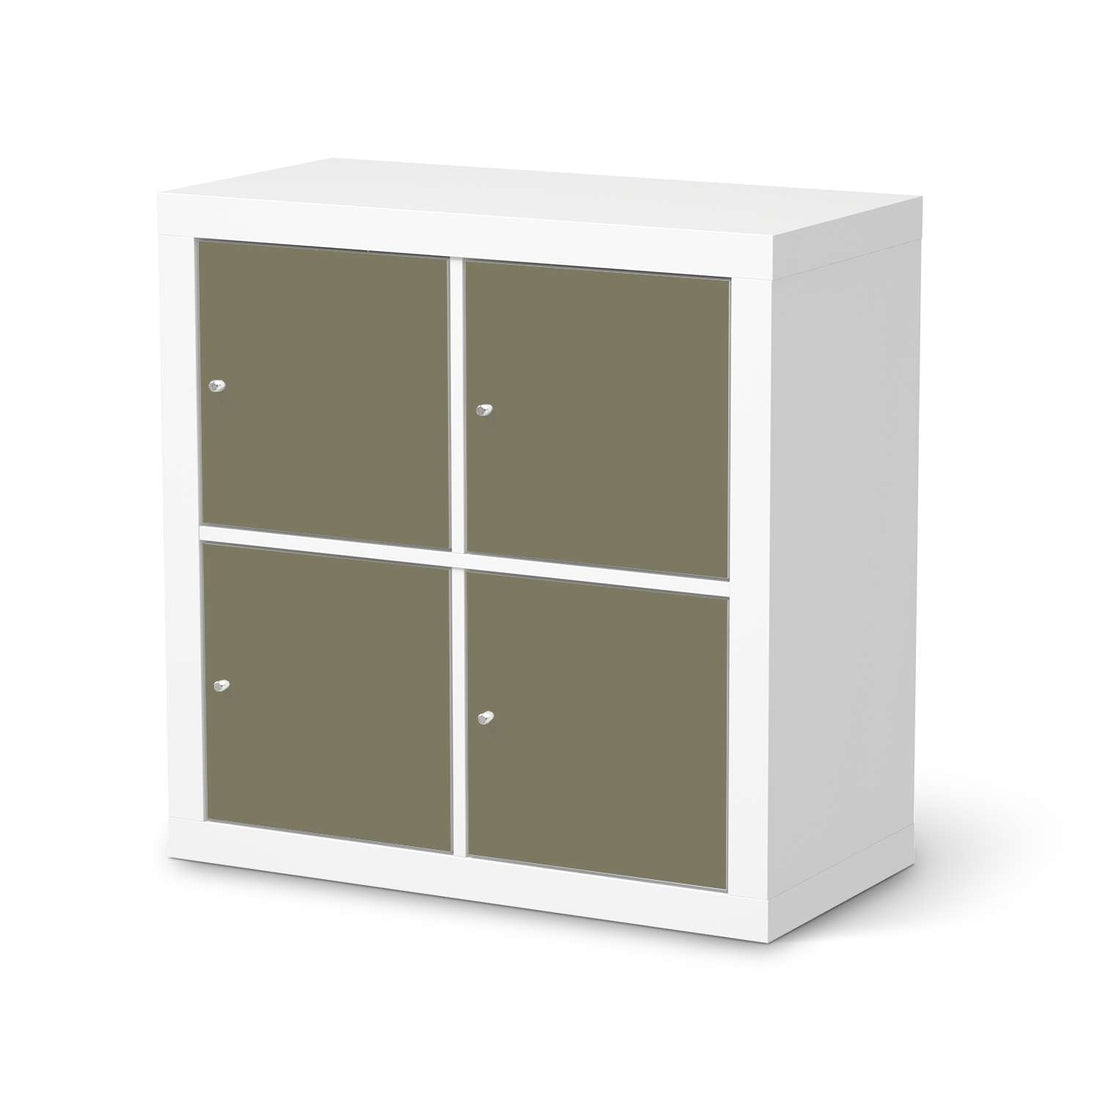 Klebefolie für Möbel Braungrau Light - IKEA Kallax Regal 4 Türen  - weiss